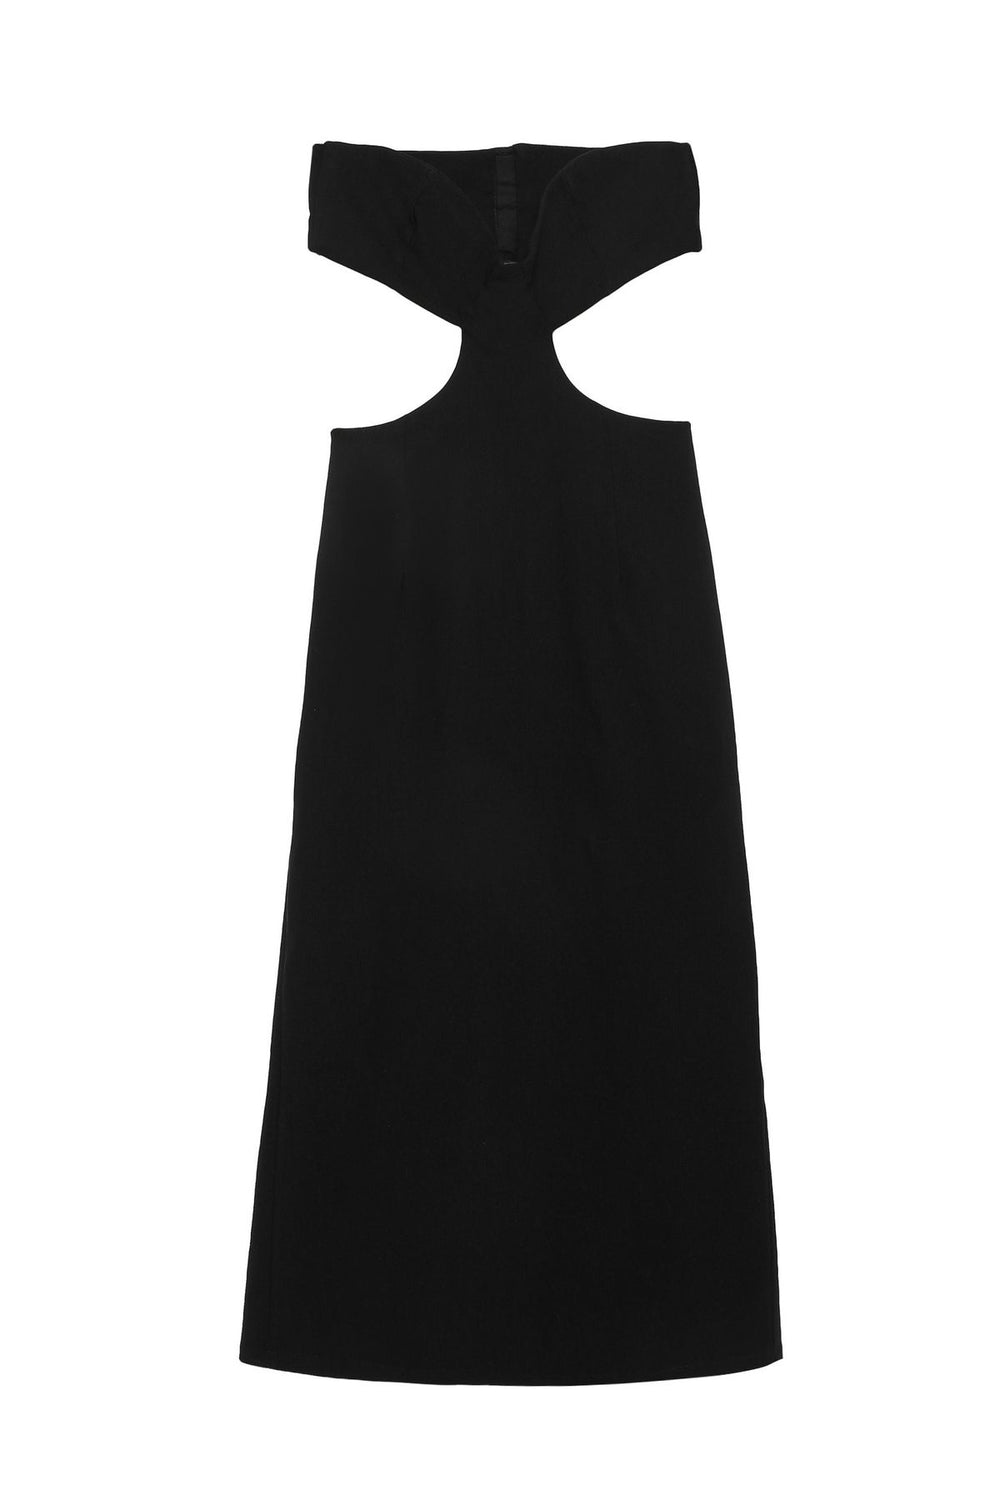 Cut Out Midi Length Dress Black